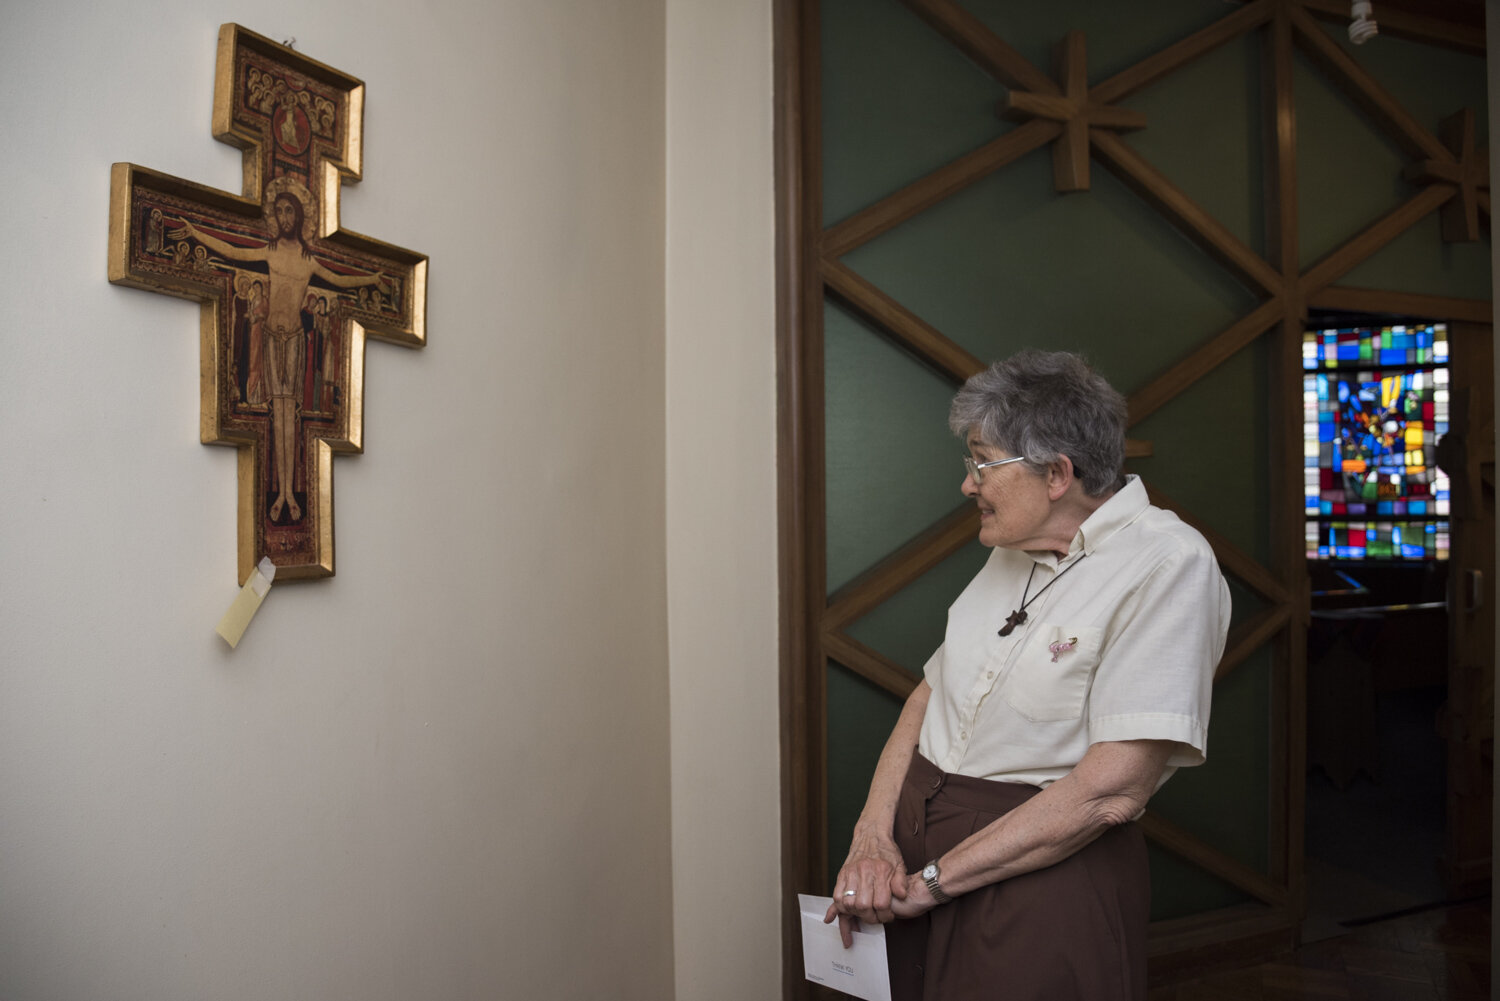  Sister Gloria admiring San Damiano Cross.  St. Anthony's Convent, Soho, NYC, May 24, 2018 